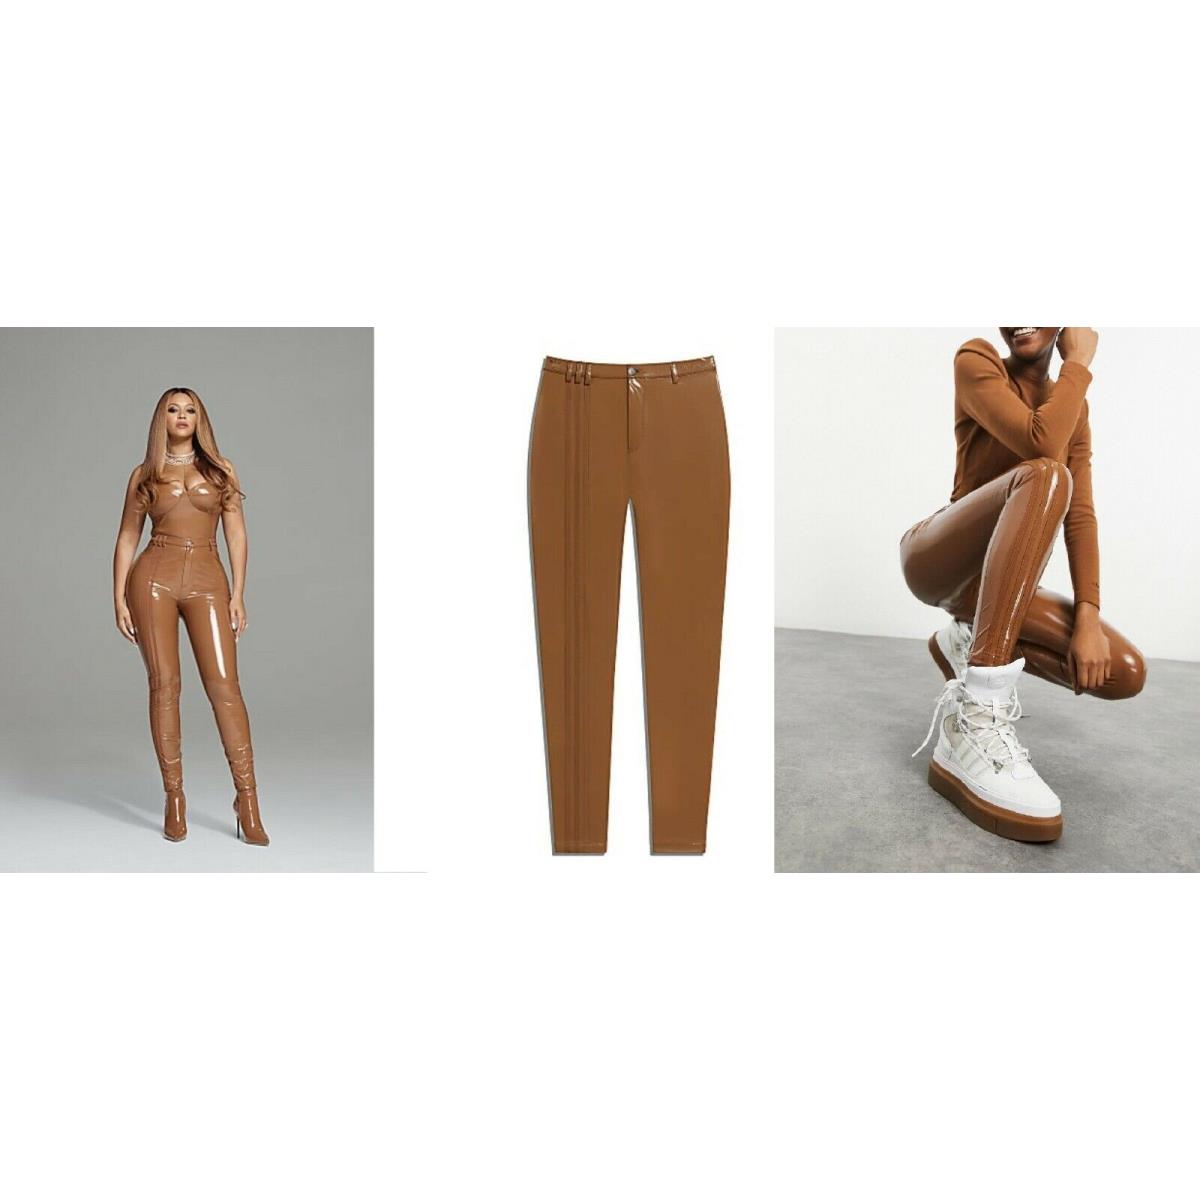 Ivy Park Beyonce Adidas Latex Pants Wild Brown sz M Fashion Tights